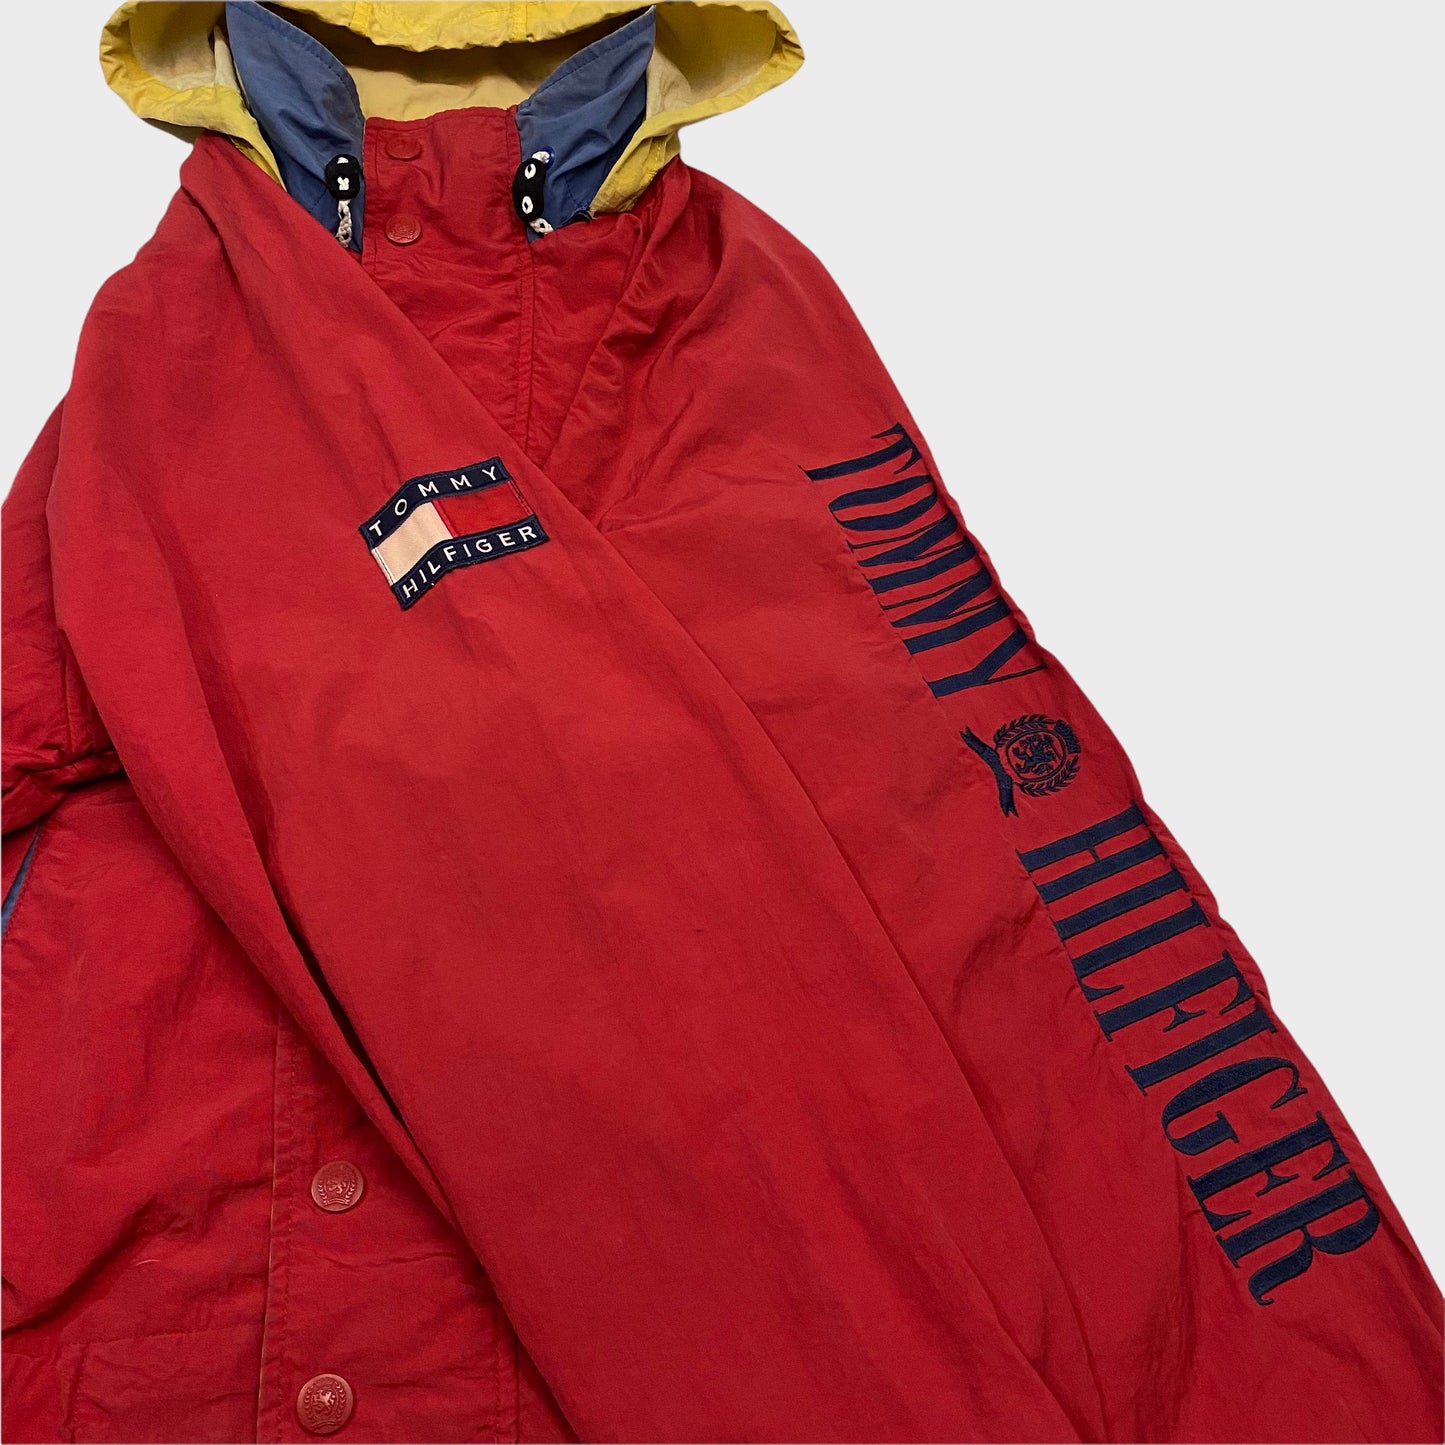 Tommy Hilfiger vintage spellout jacket - L/XL